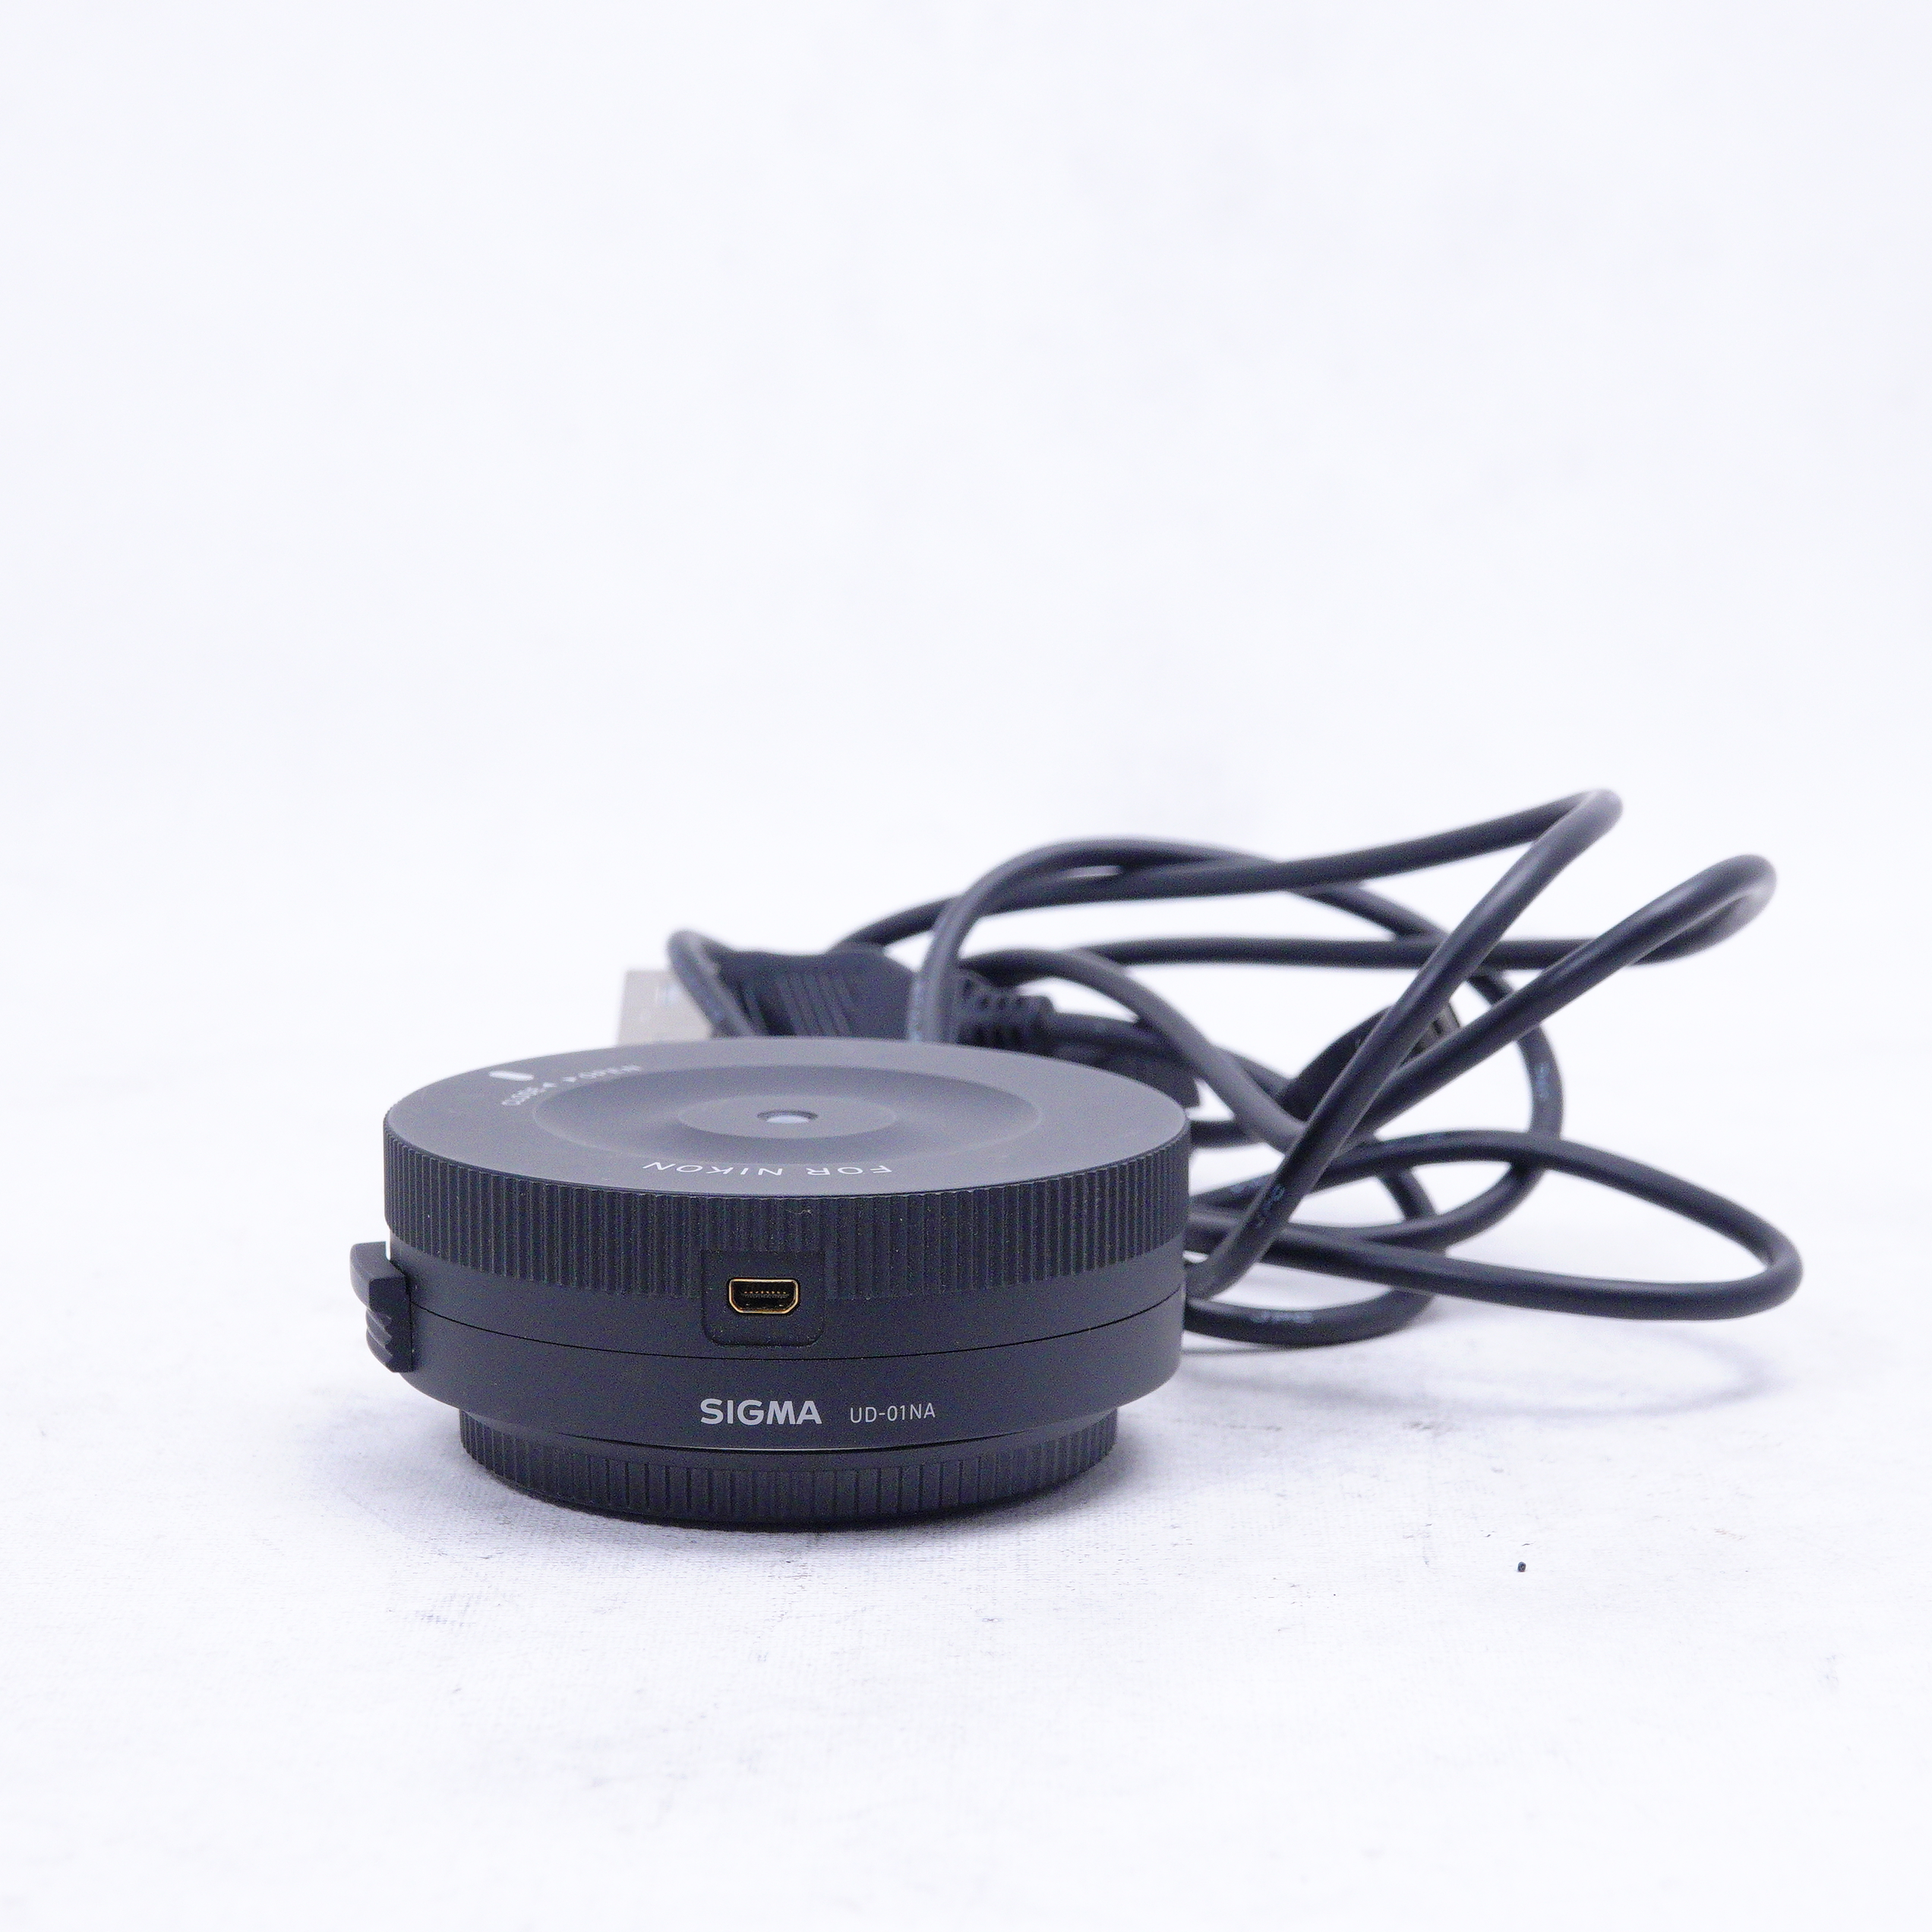 Dock SIGMA USB UD-01 NA para Nikon - Usado